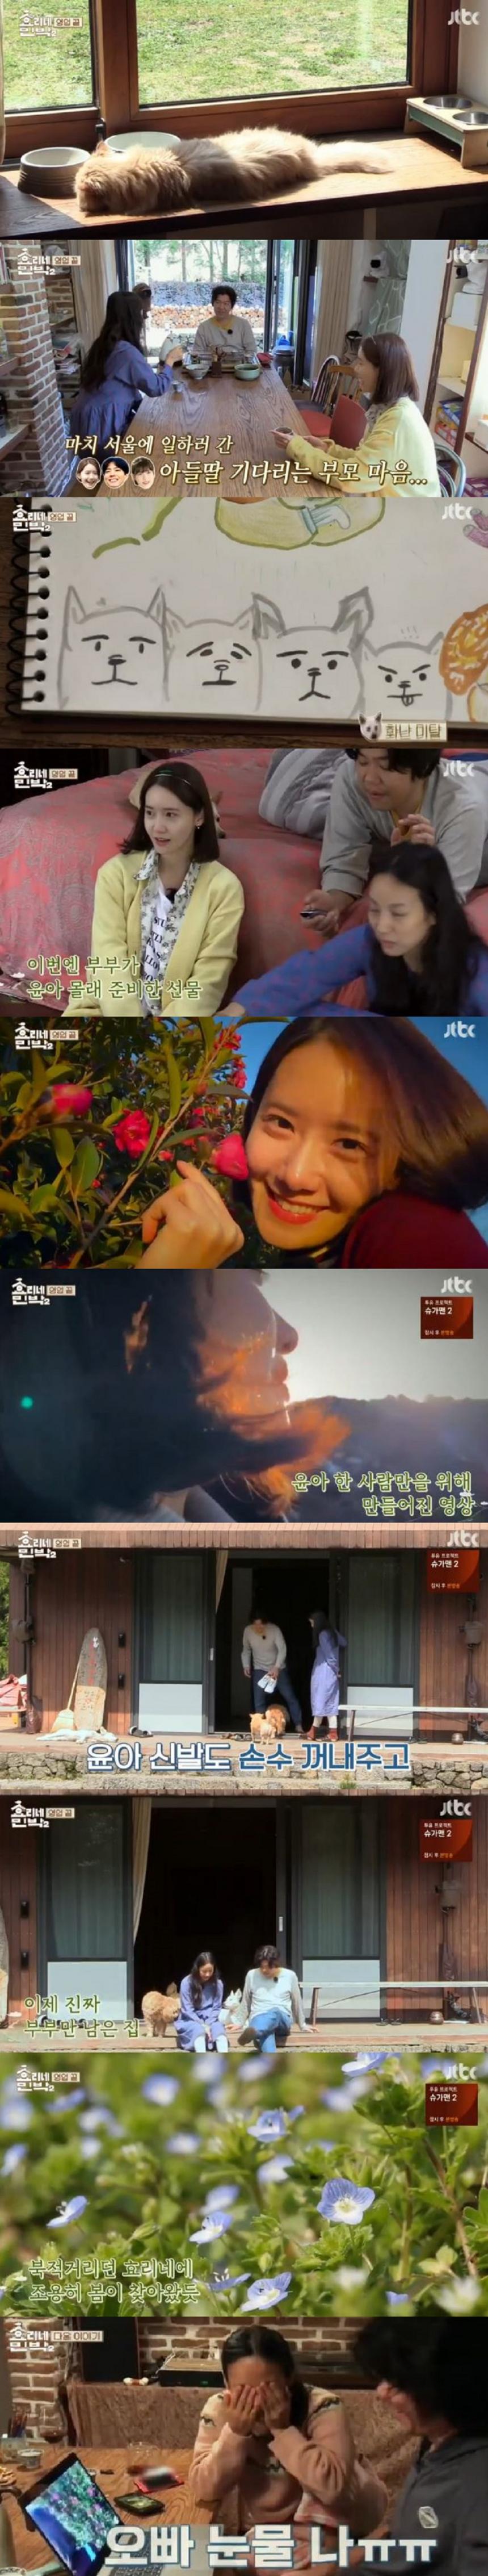 JTBC ‘효리네민박 시즌2’ 방송캡쳐